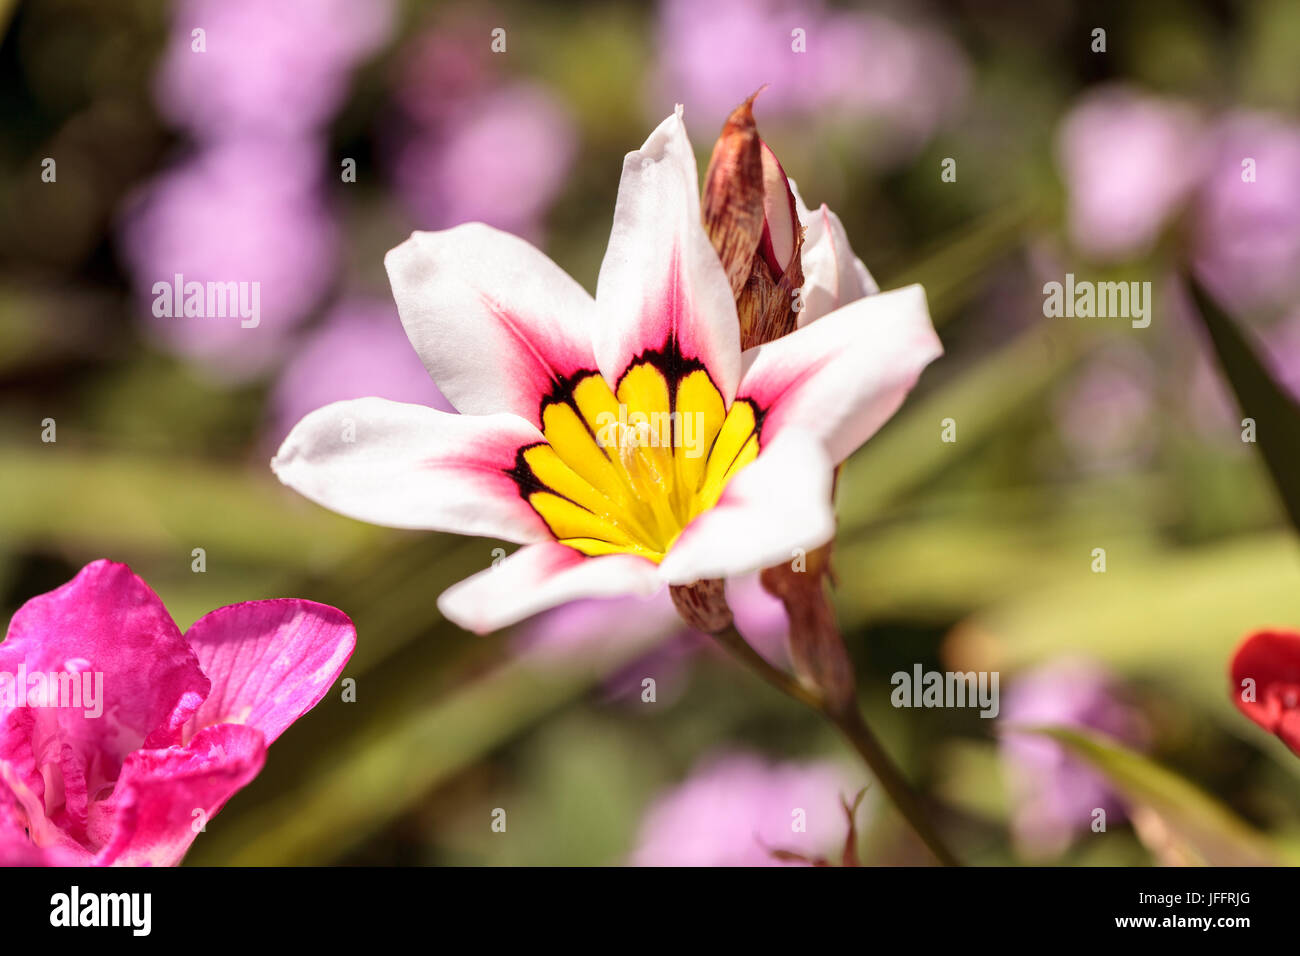 Mariposa lily flower Stock Photo